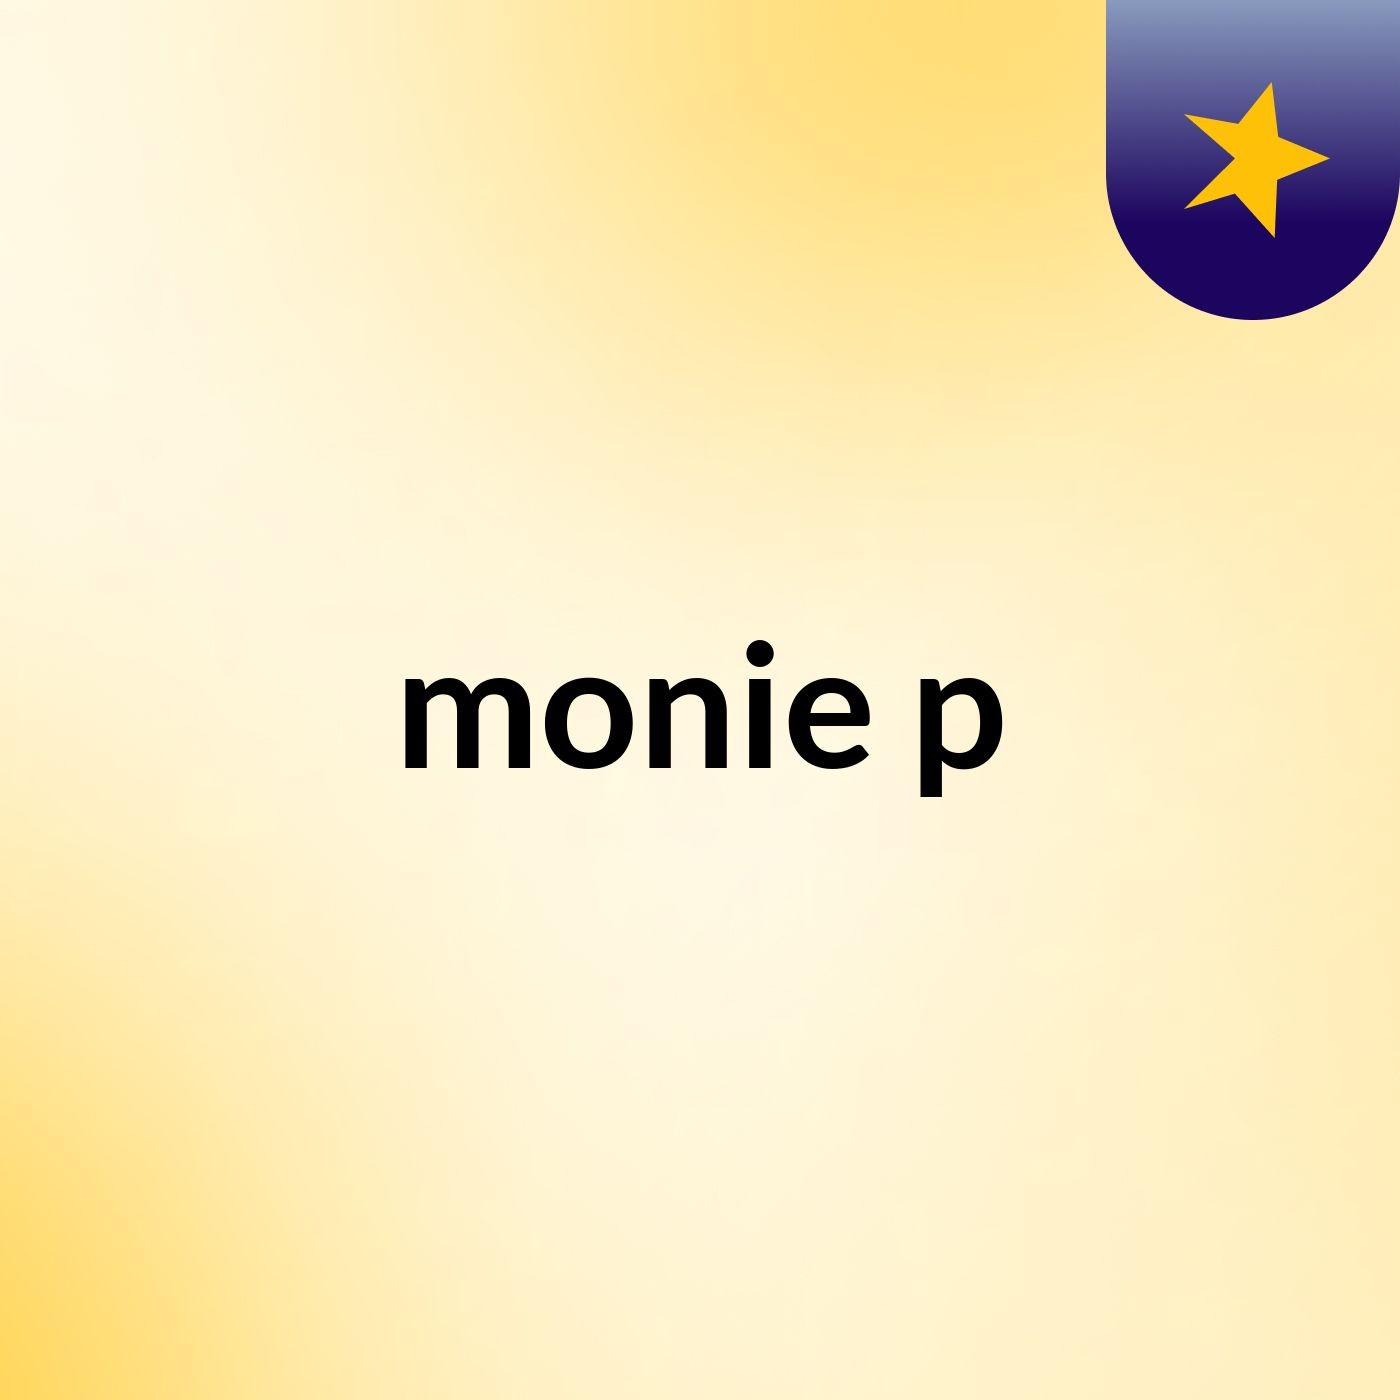 monie p